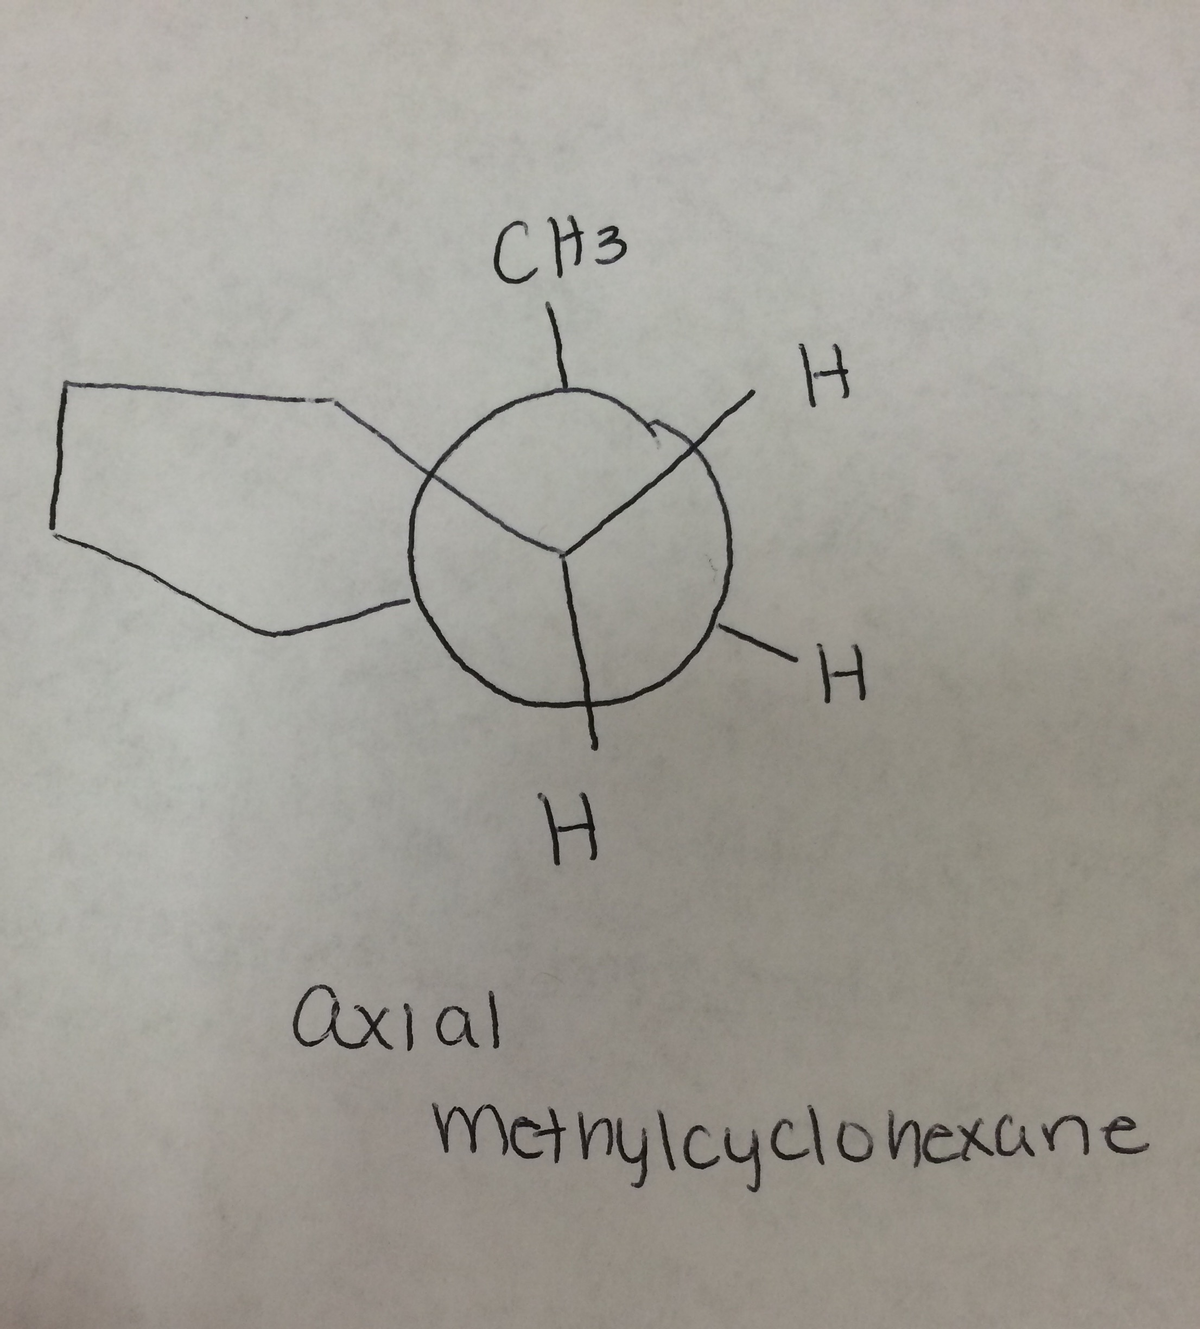 CH3
axial
H
H
H
methylcyclohexane